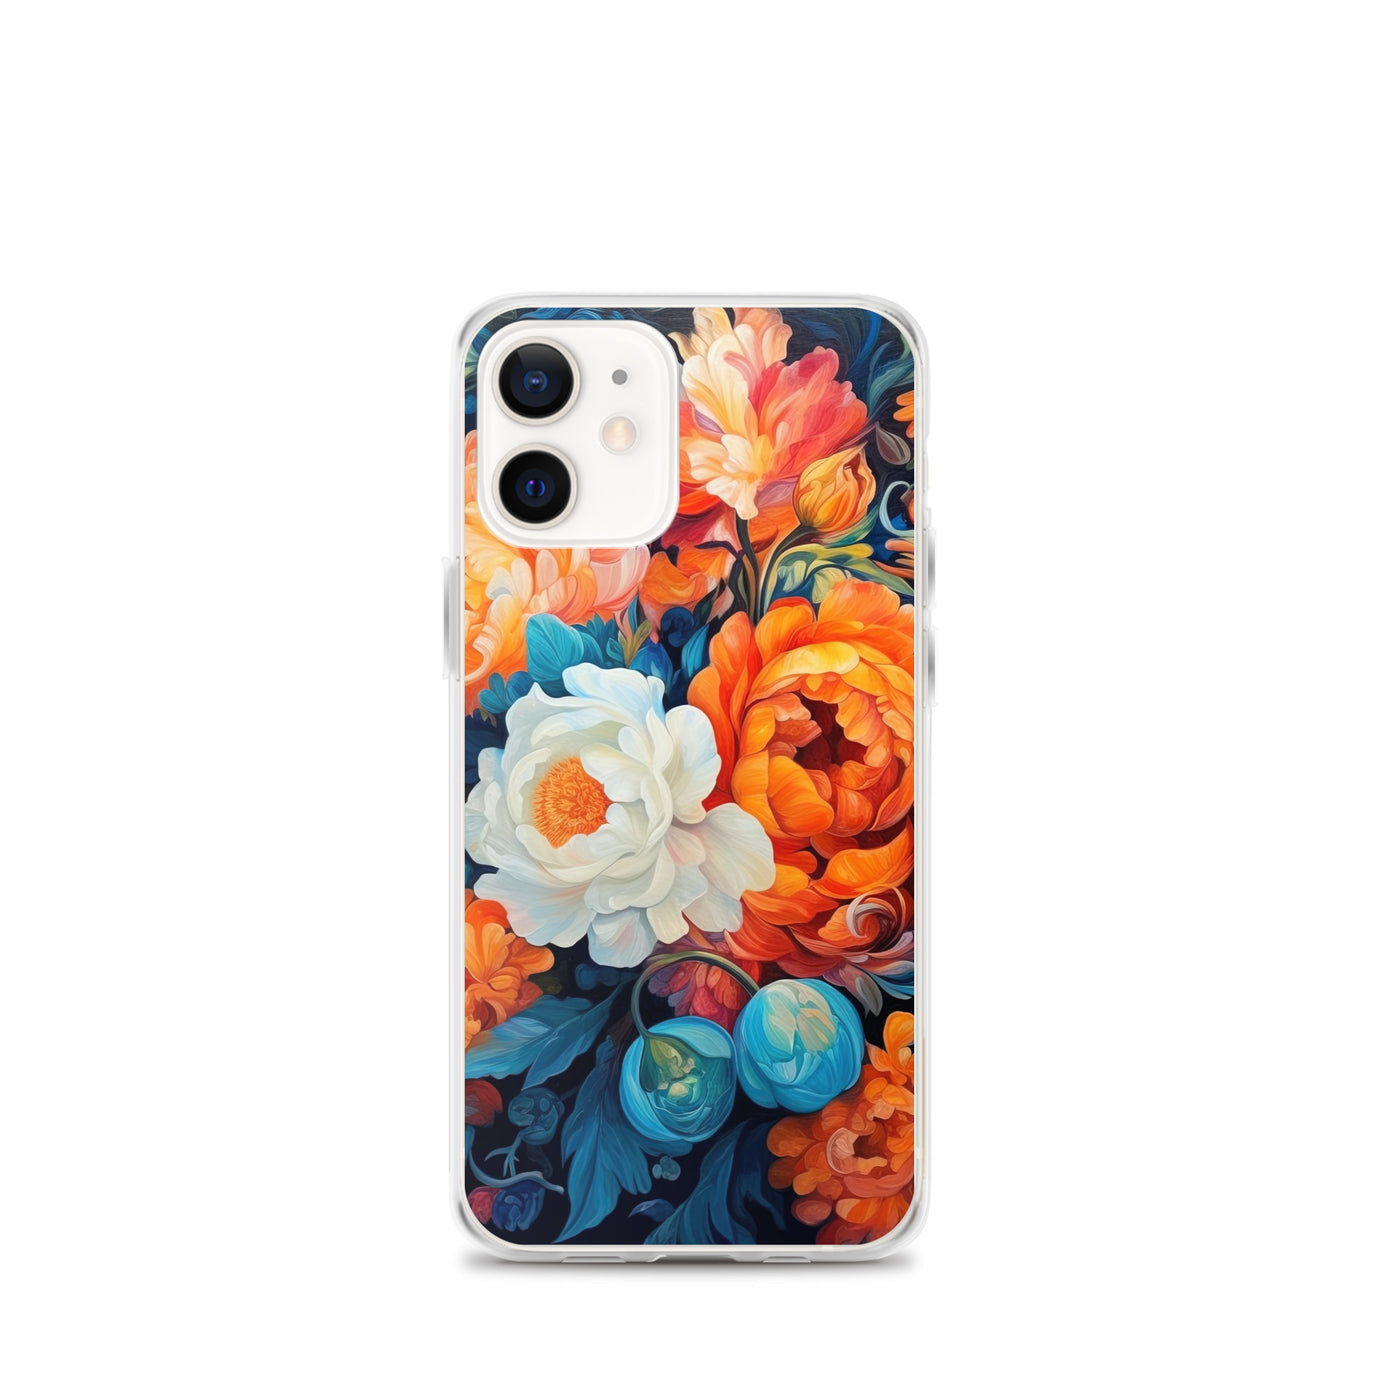 Bunte Blumen - Schöne Malerei - iPhone Schutzhülle (durchsichtig) camping xxx iPhone 12 mini